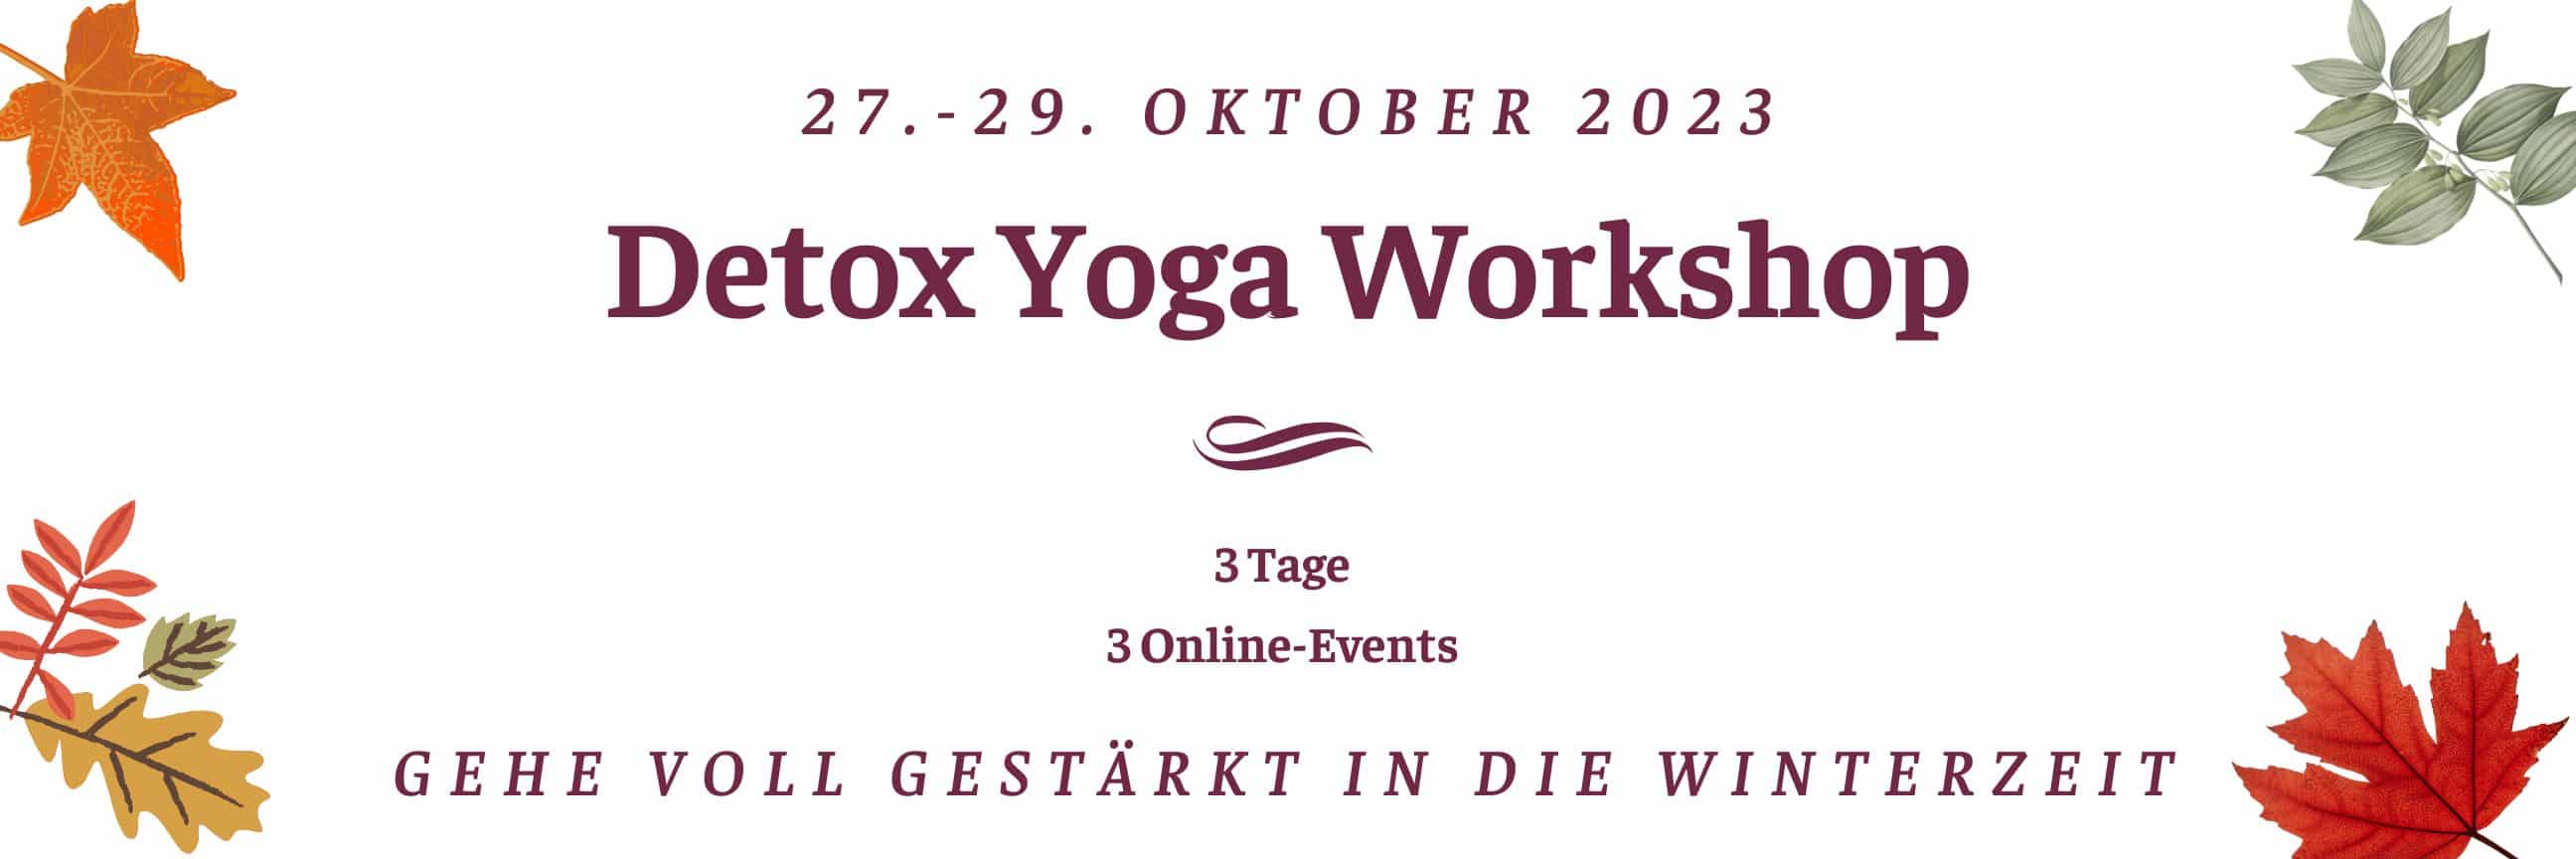 Workshop zum Detox Yoga am 27.-29. Oktober 2023